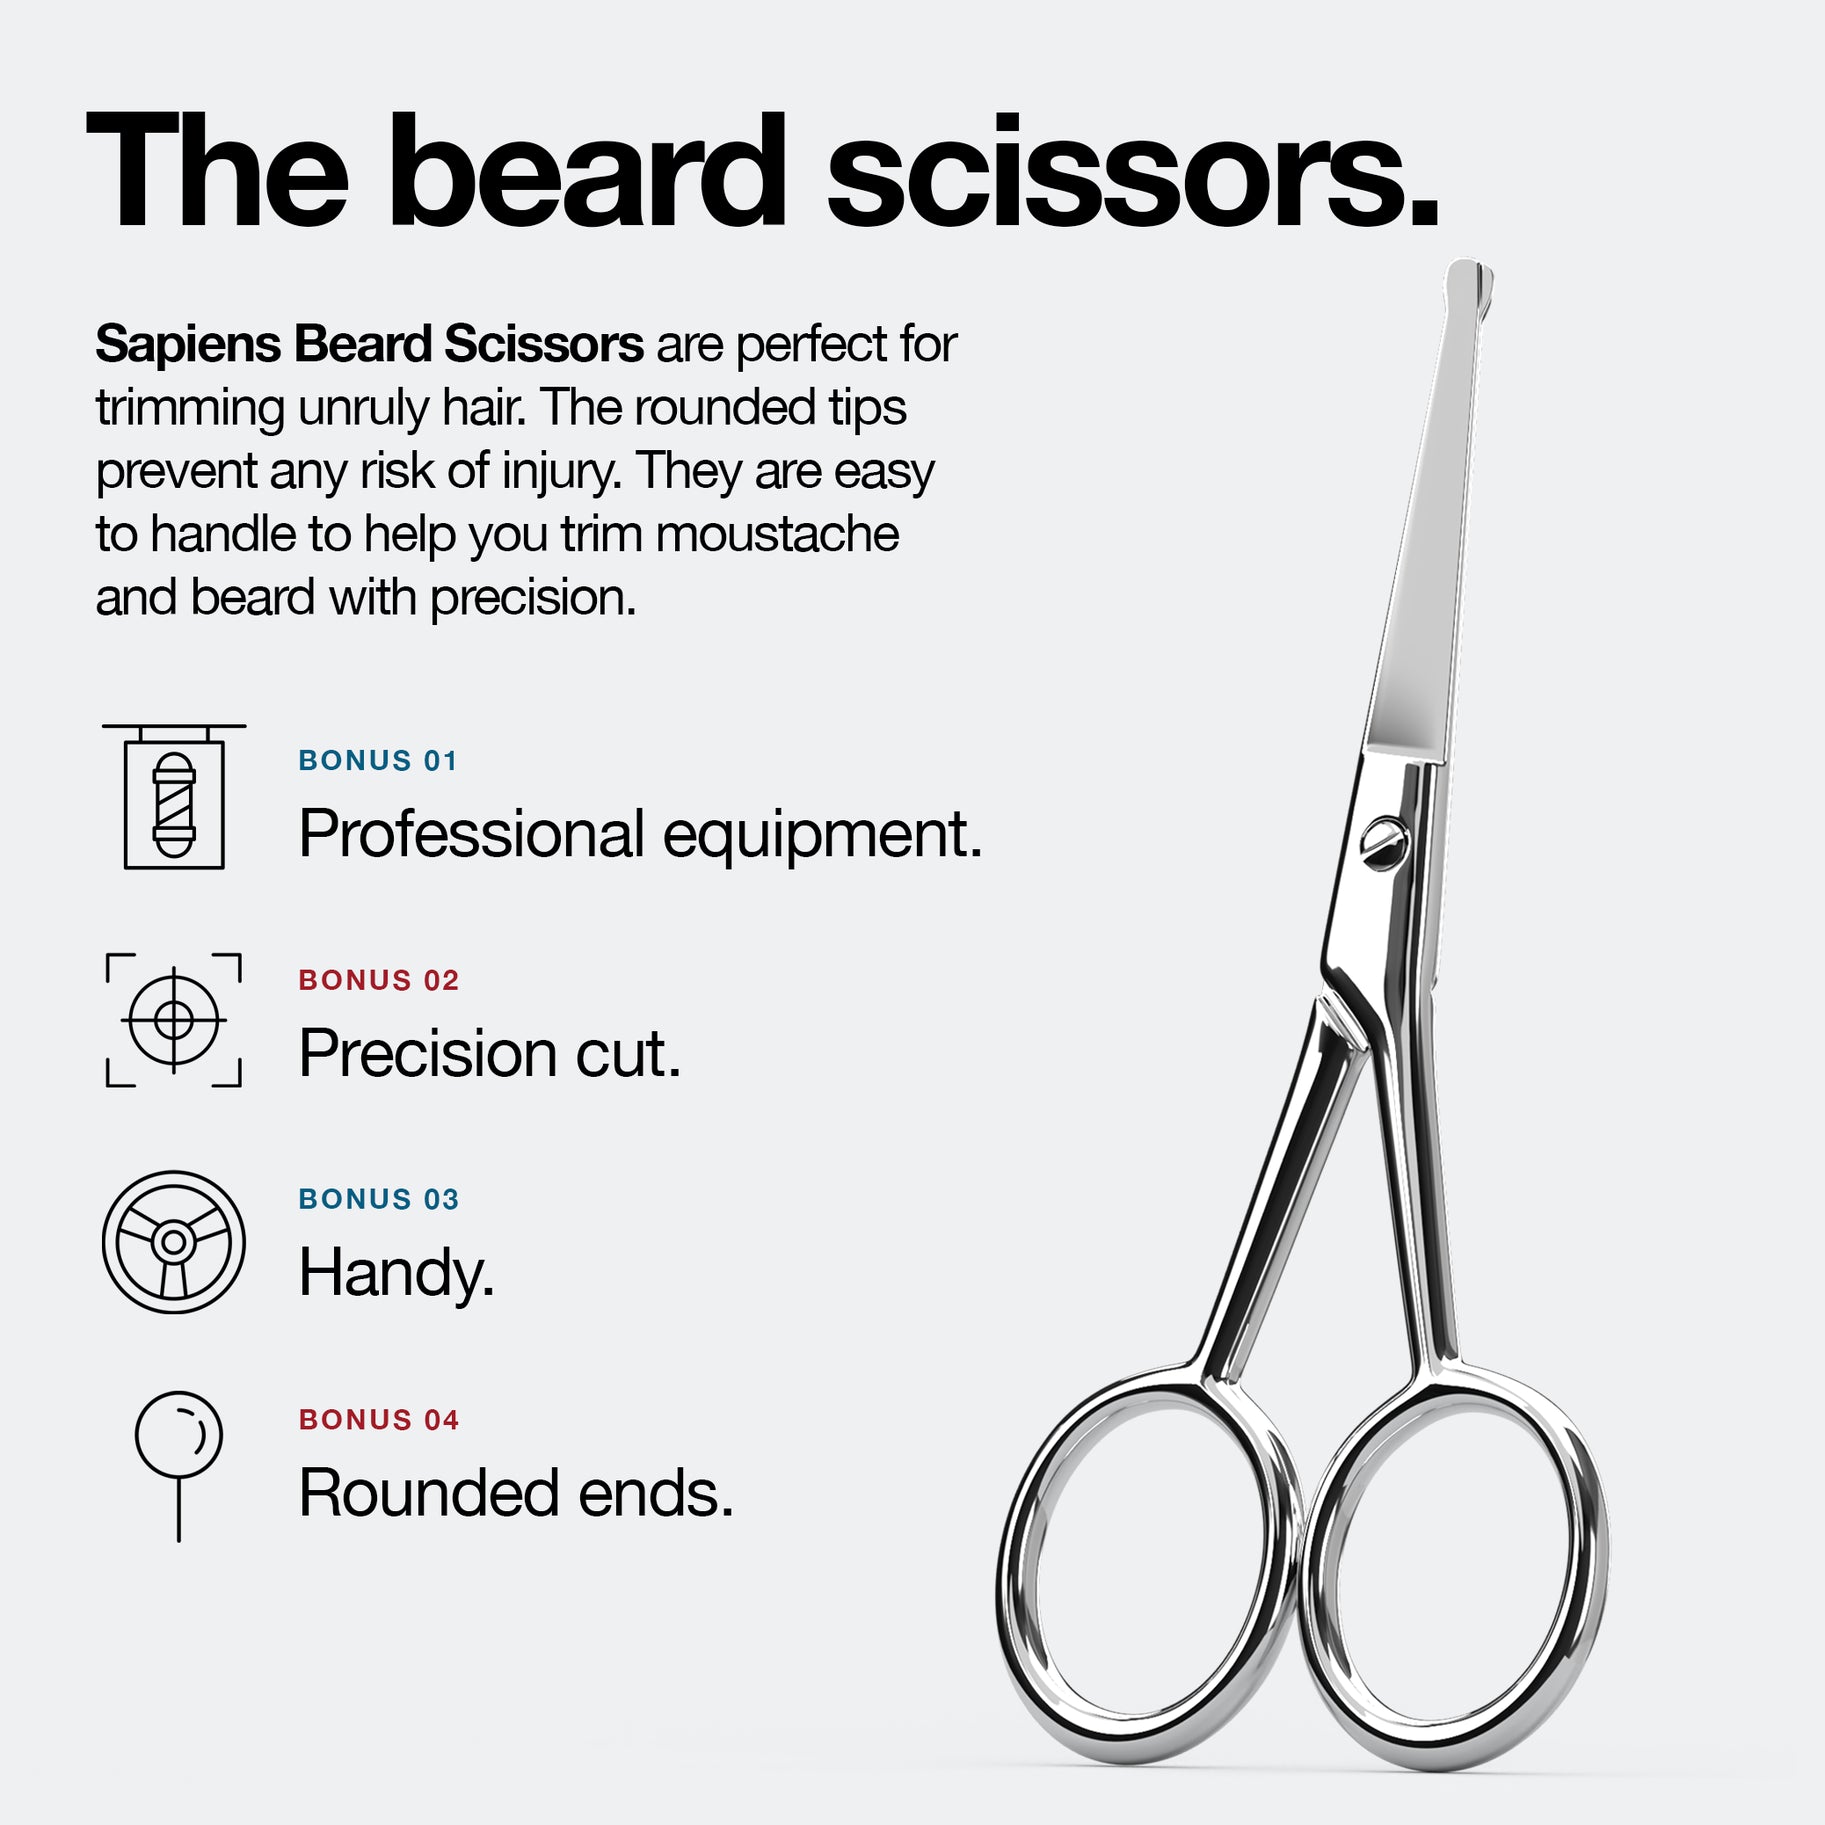 Stainless Steel Beard Scissors.